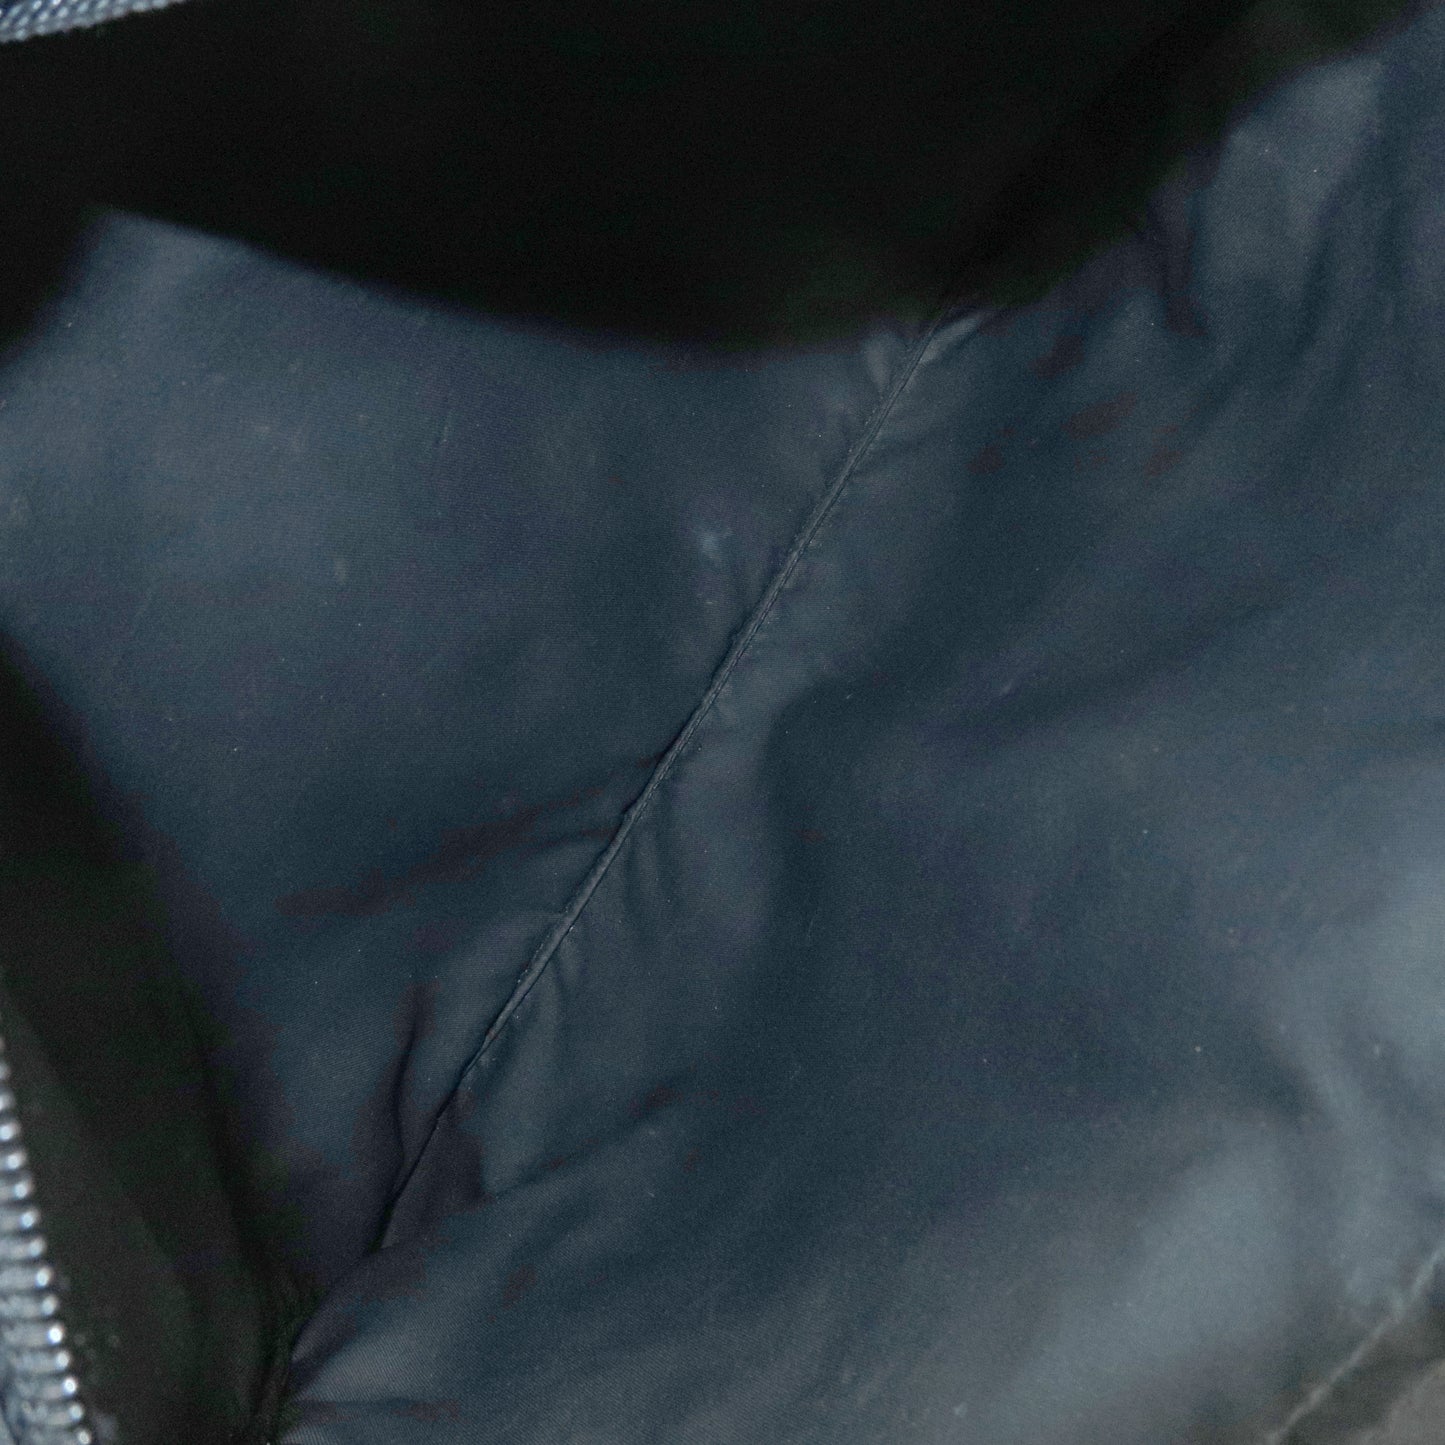 PRADA Logo Nylon Leather Shoulder Bag Crossbody Bag Black